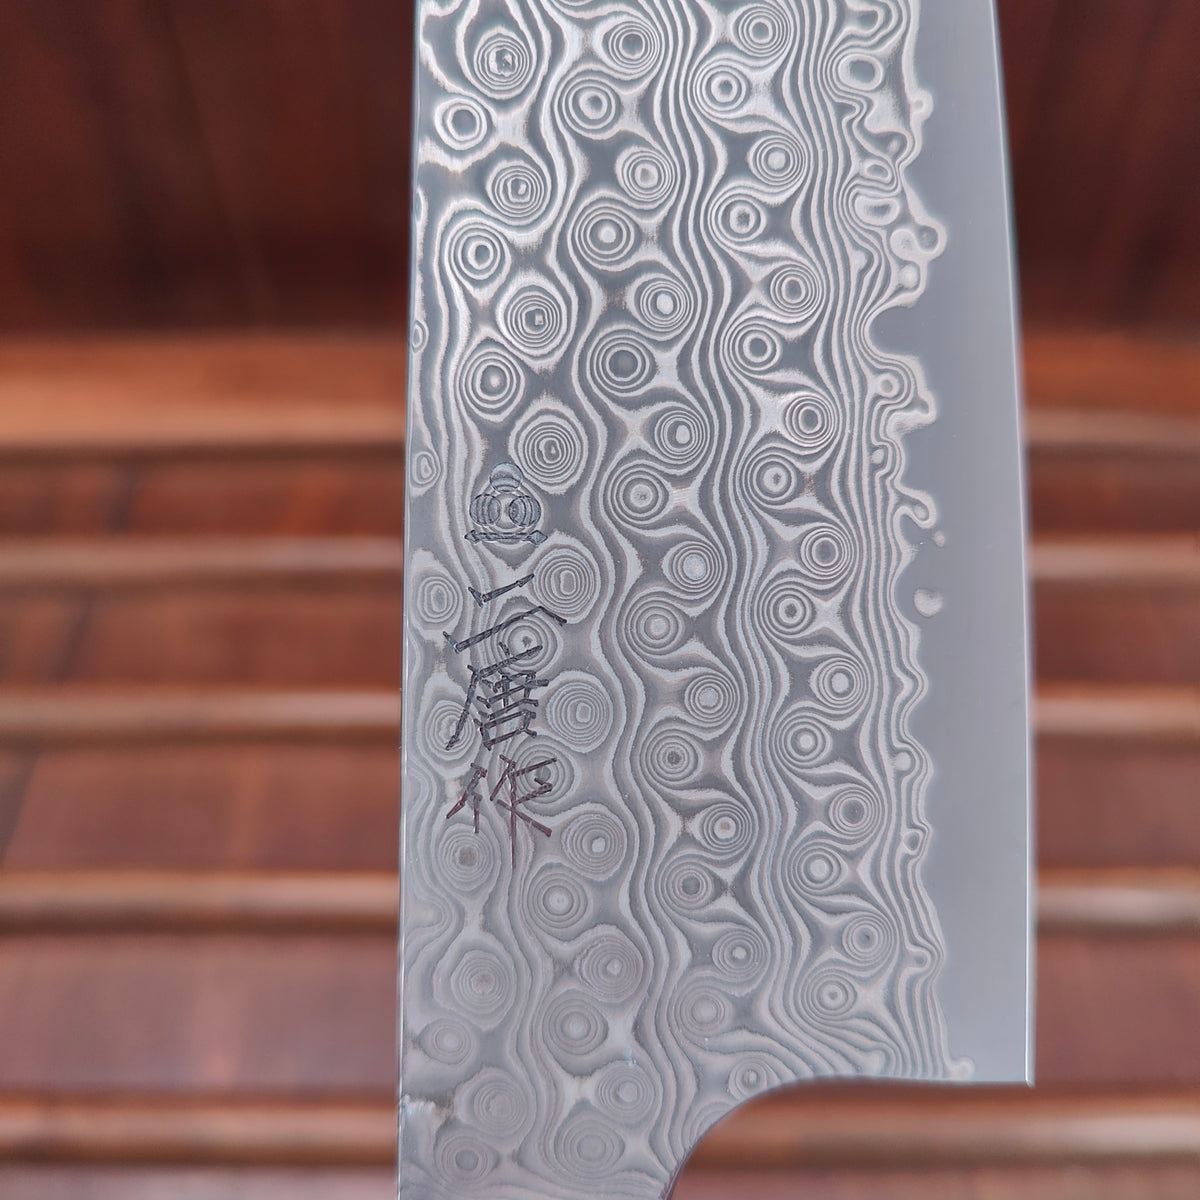 Buy KITCHEN KNIFE CHEF 210 N690 26/2022 STABILIZED MAPLE BURL LAS